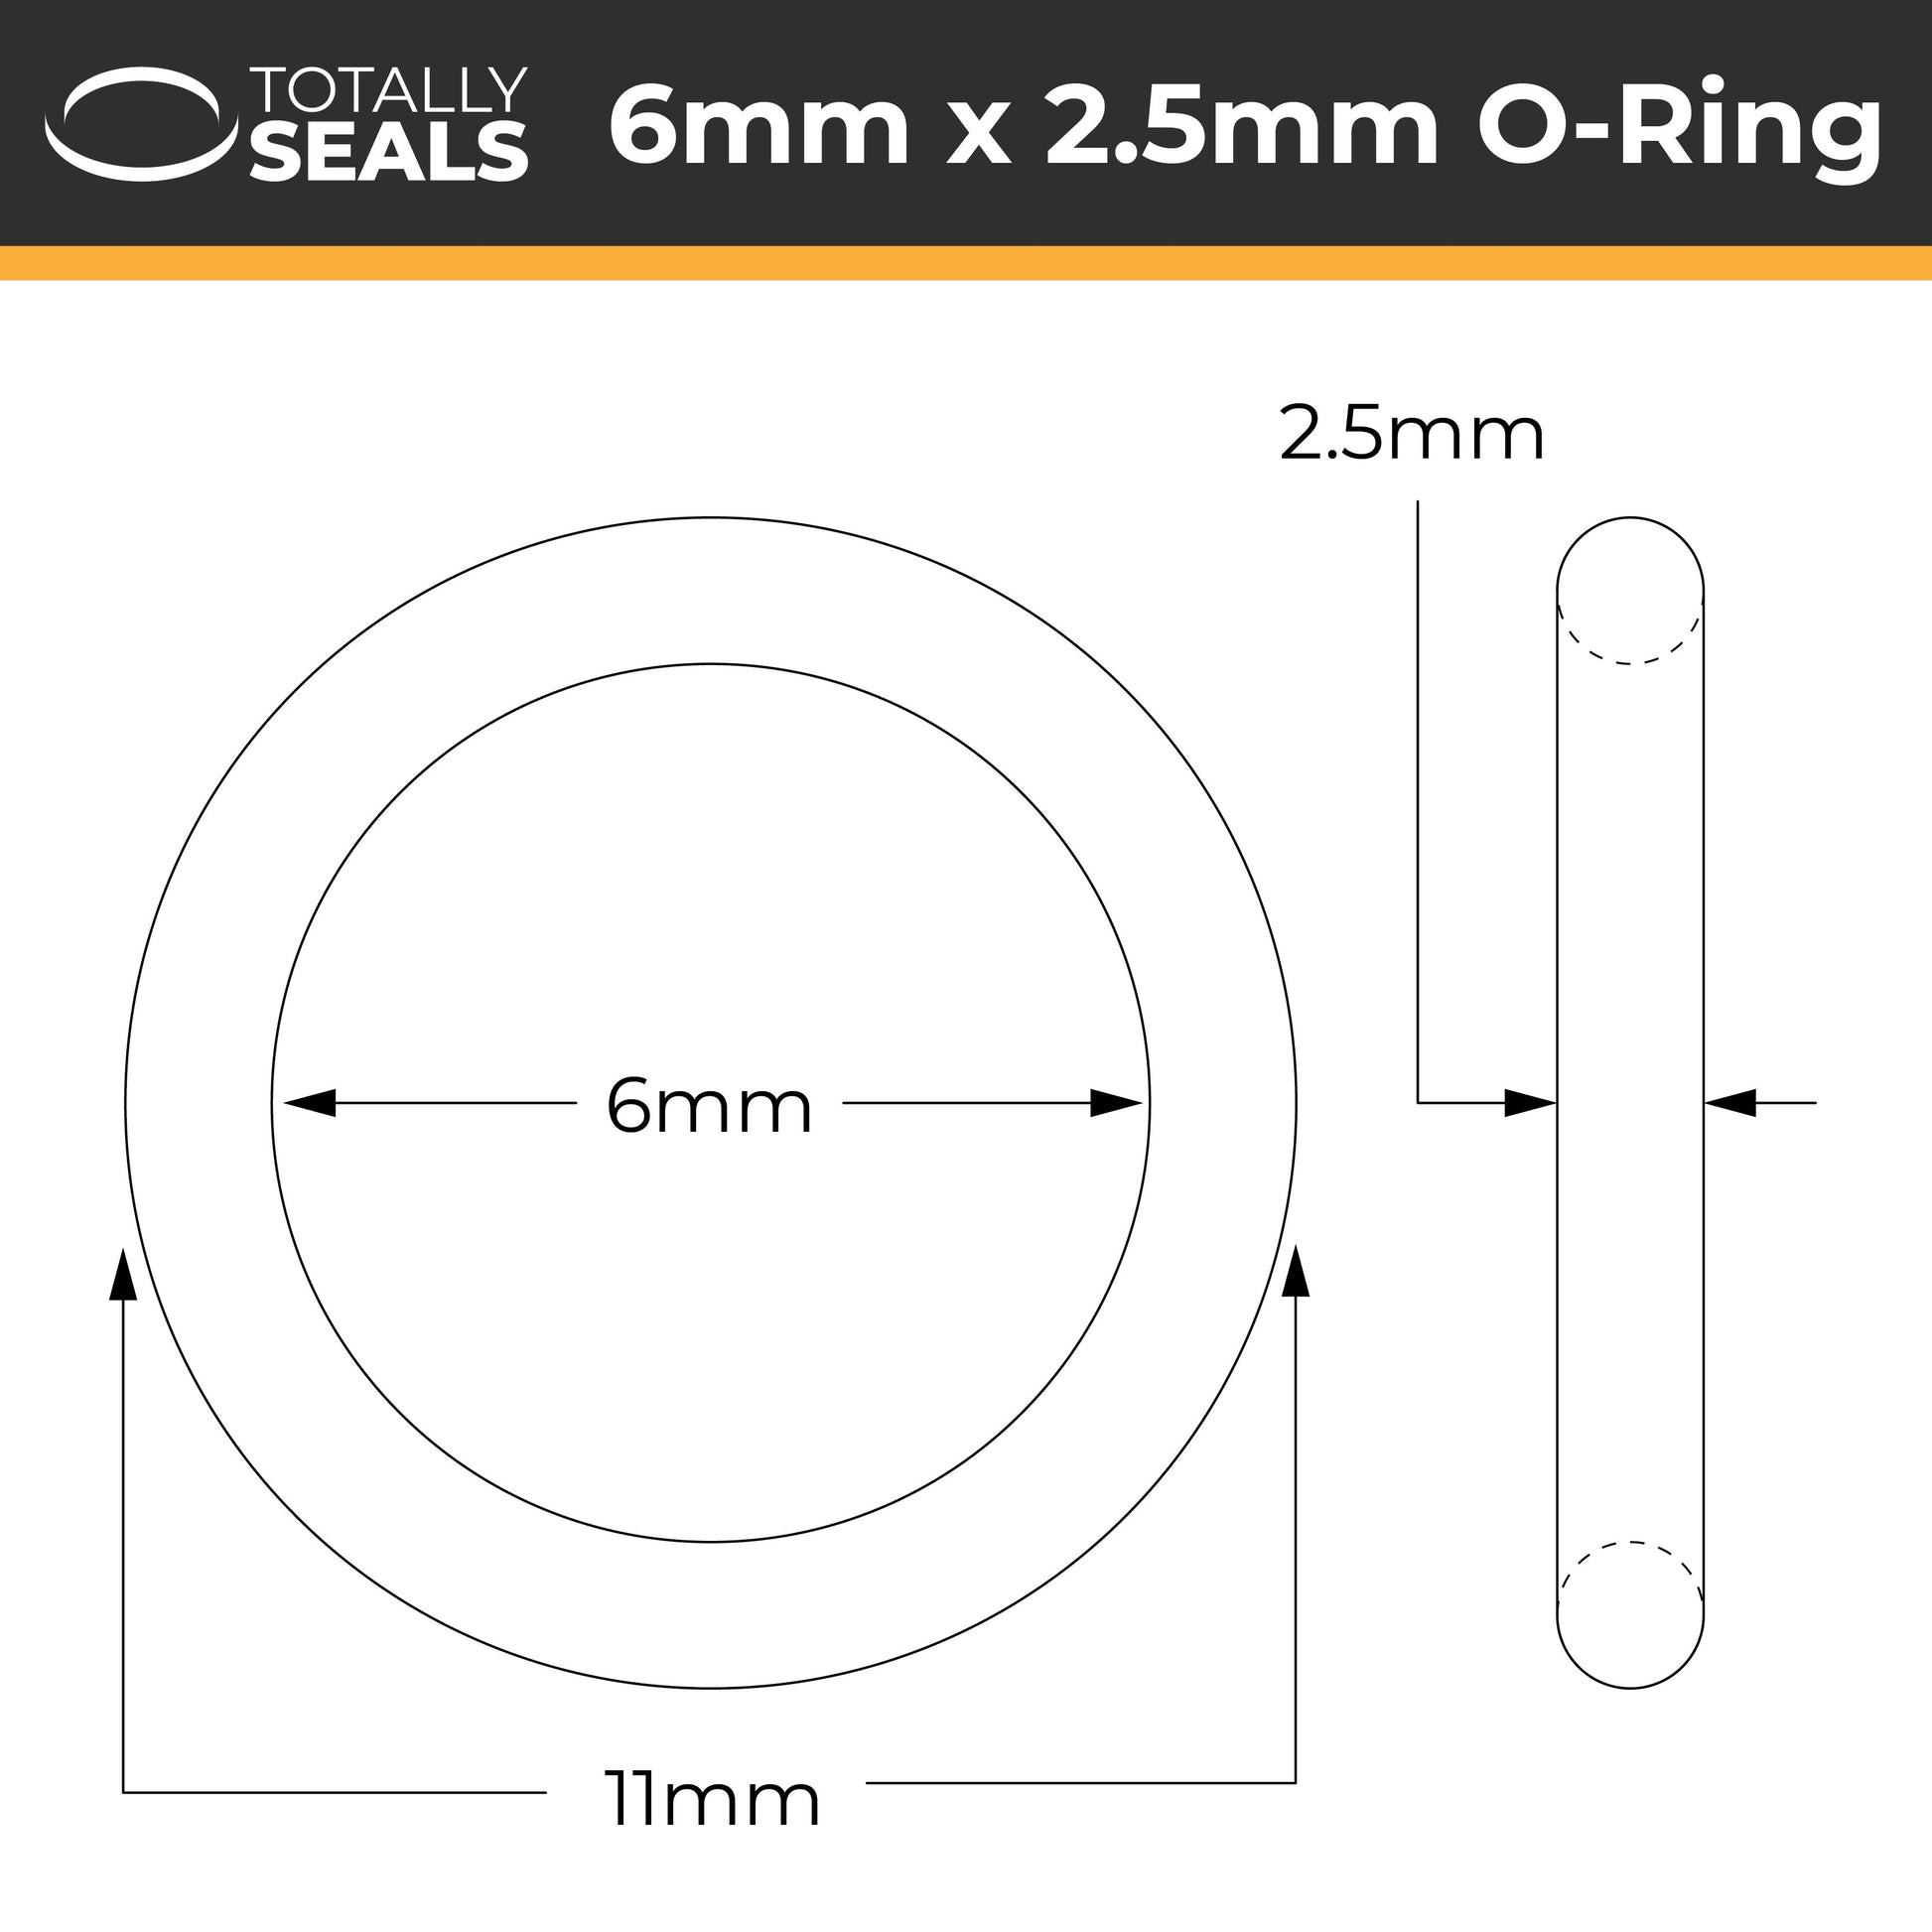 6mm x 2.5mm (11mm OD) FKM (Viton™) O-Rings - Totally Seals®